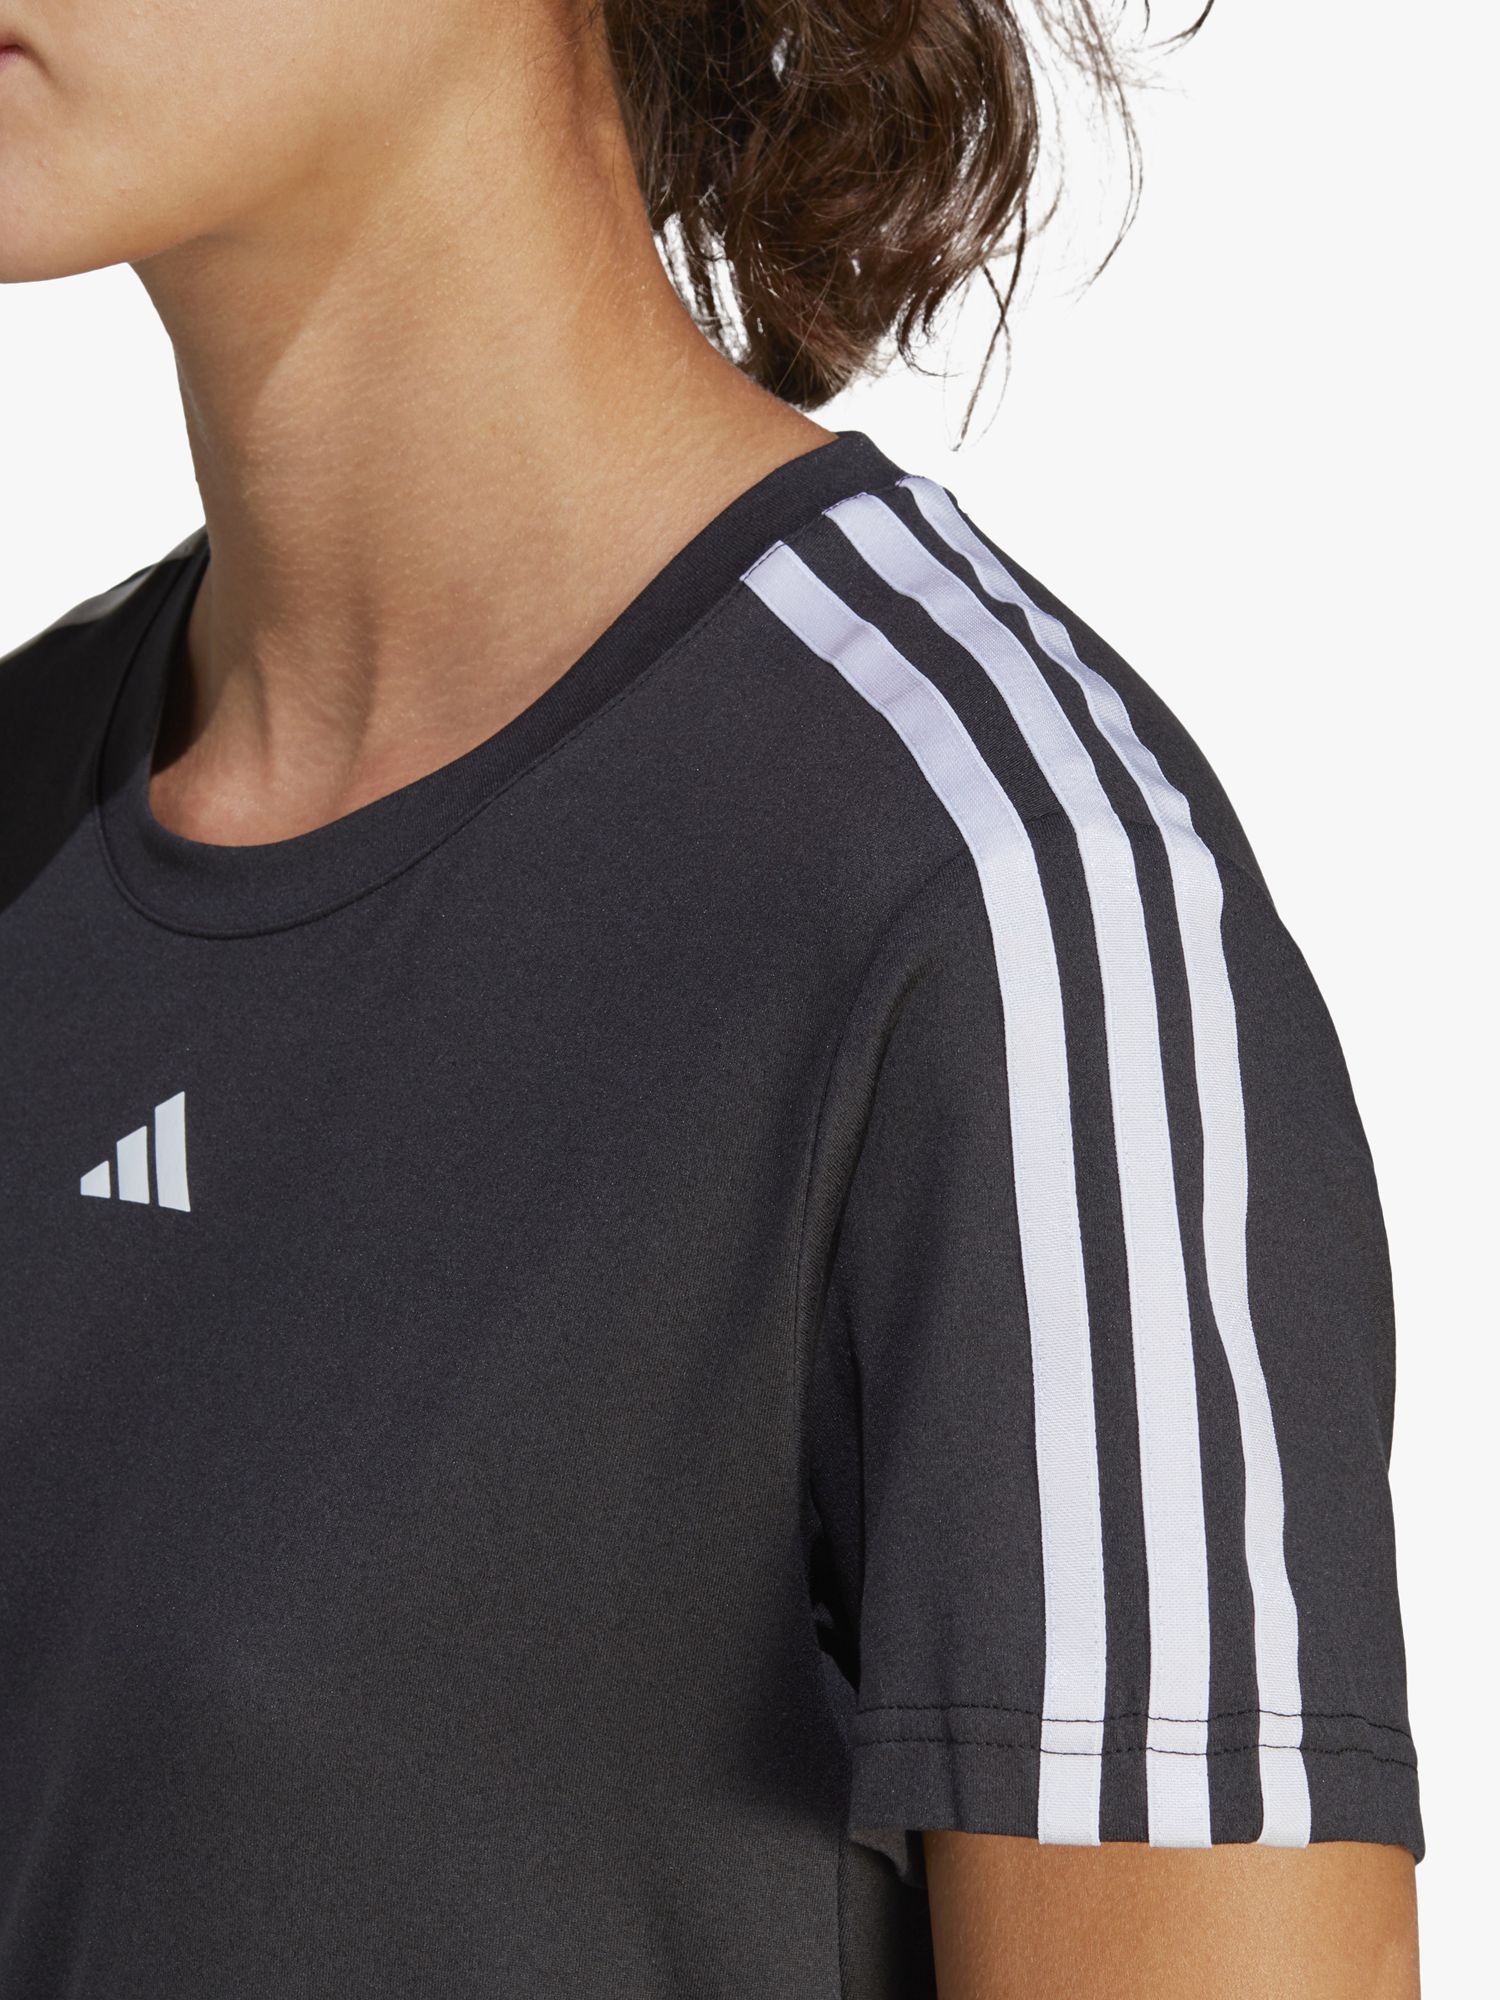 adidas Train Essentials 3-Stripes Recycled Gym Top, Black/White, XS